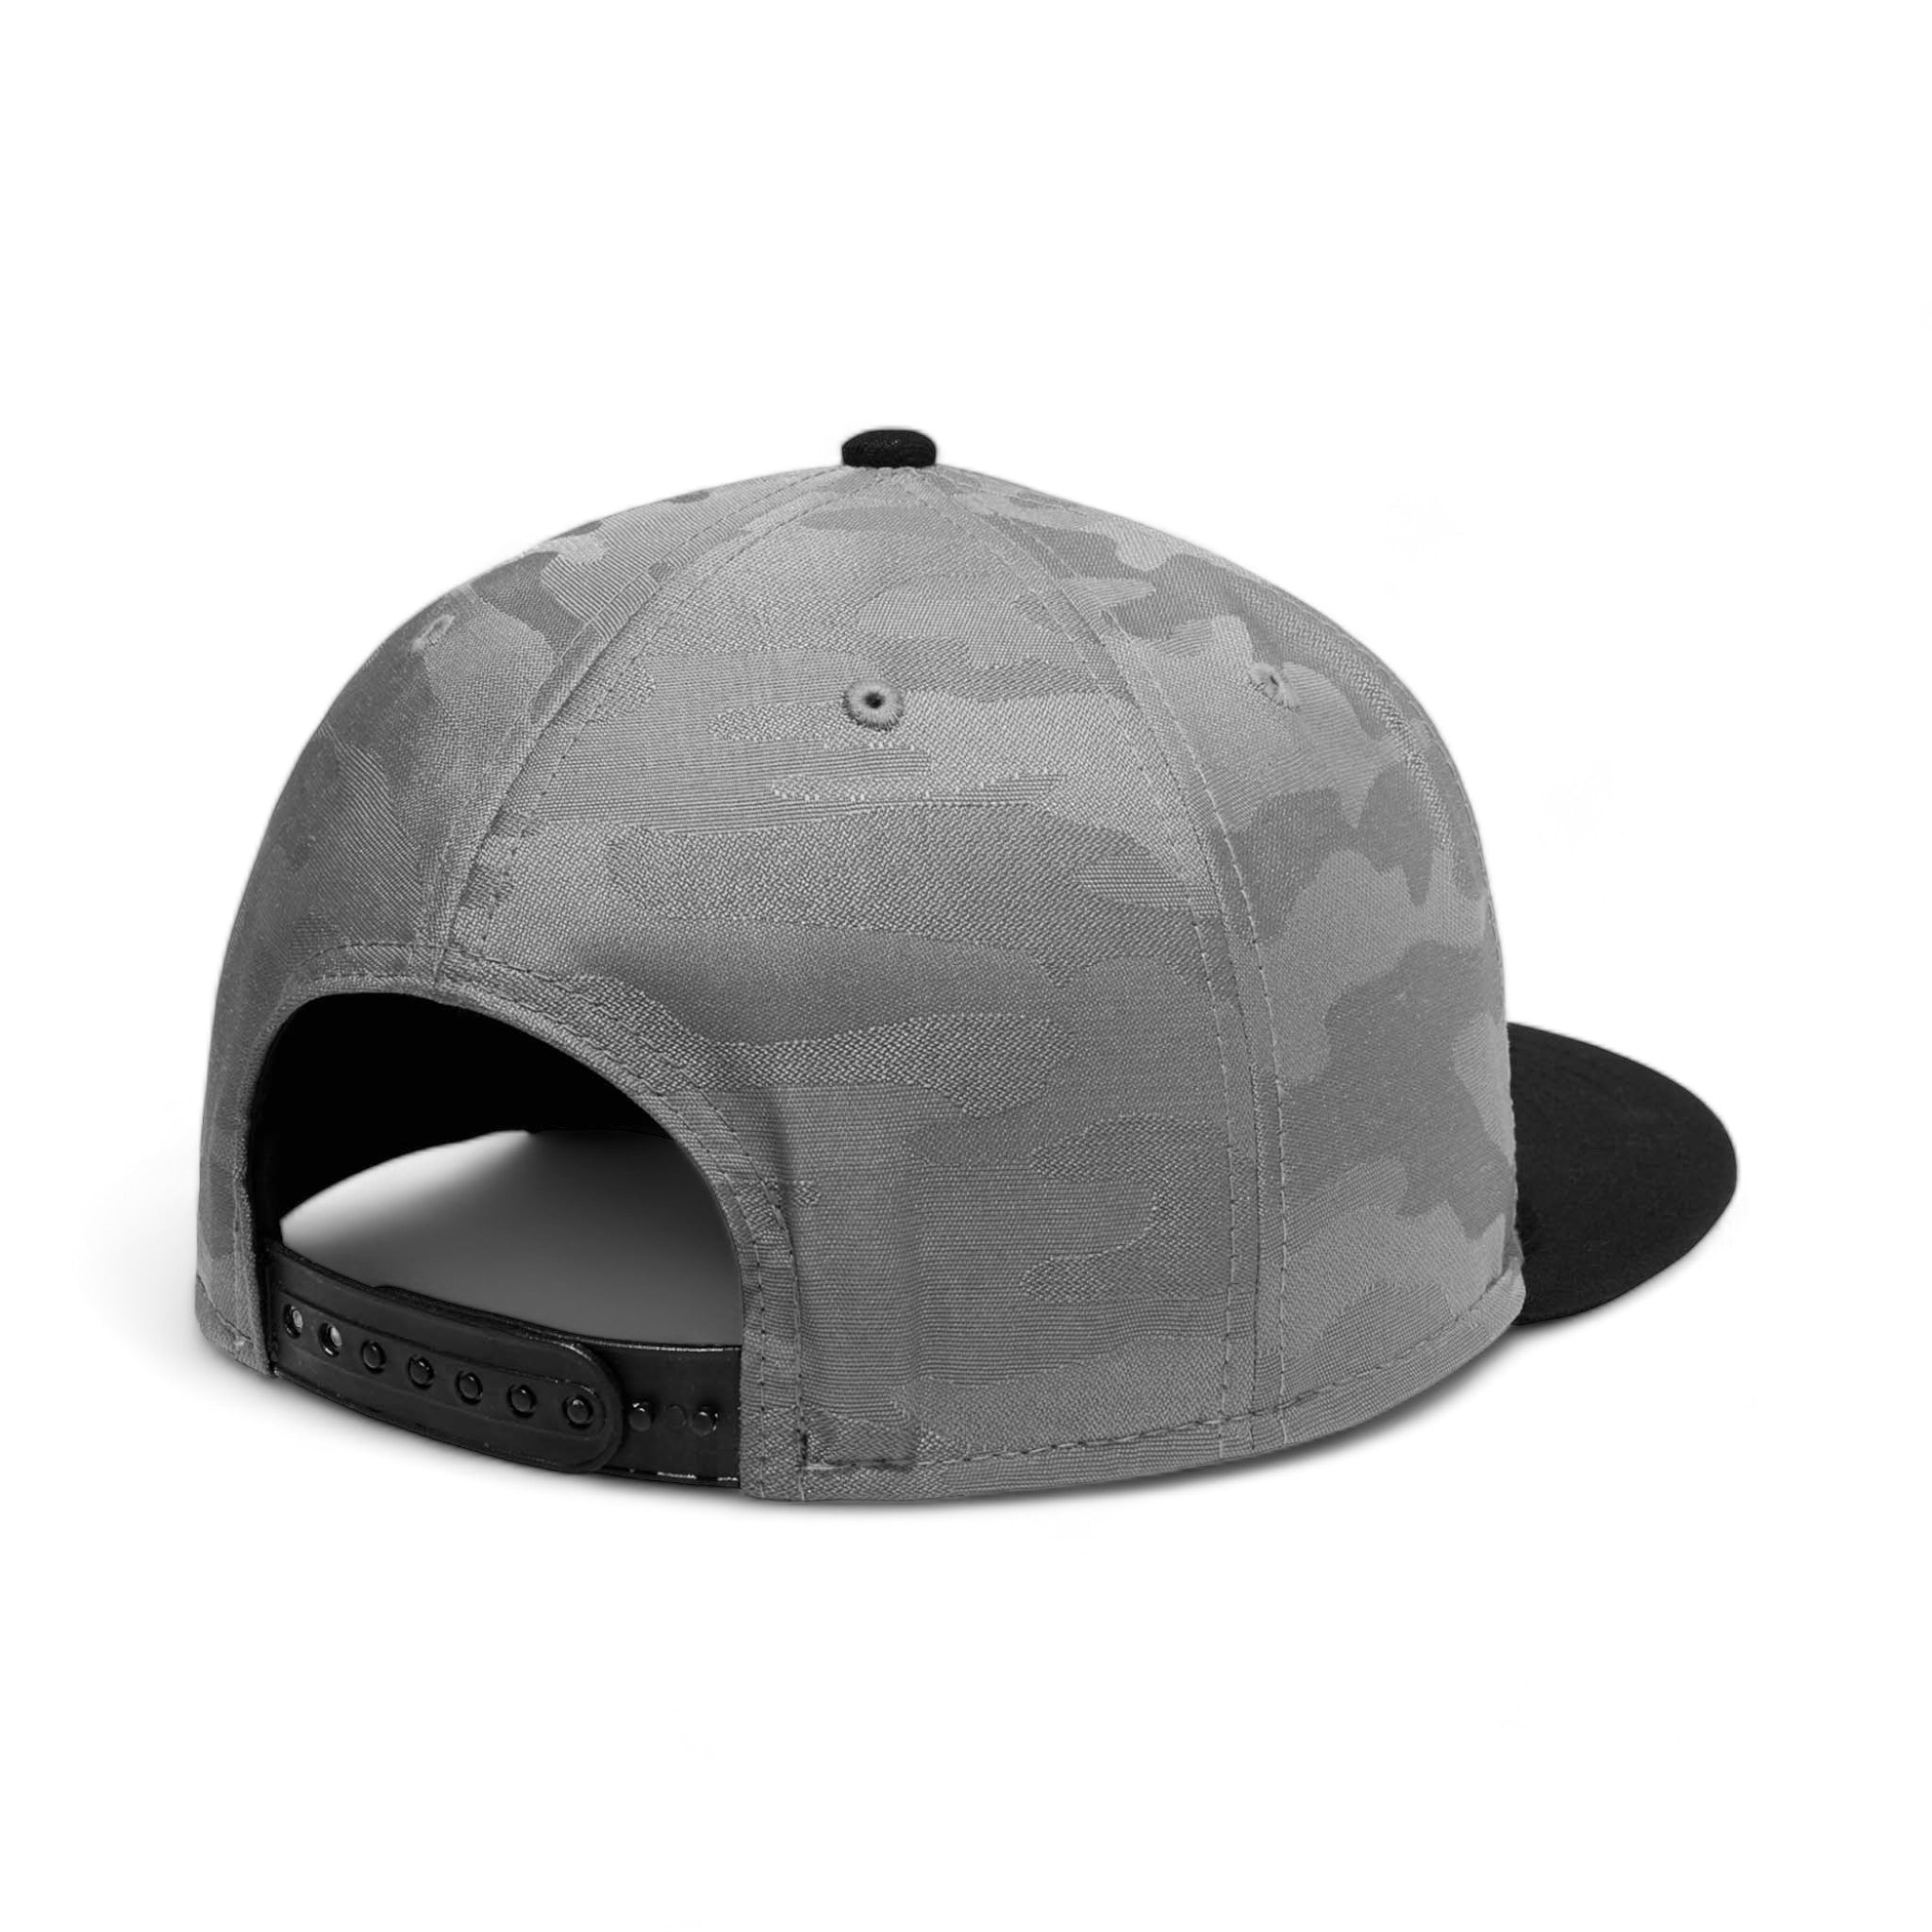 Back view of New Era NE407 custom hat in black and rainstorm grey camo